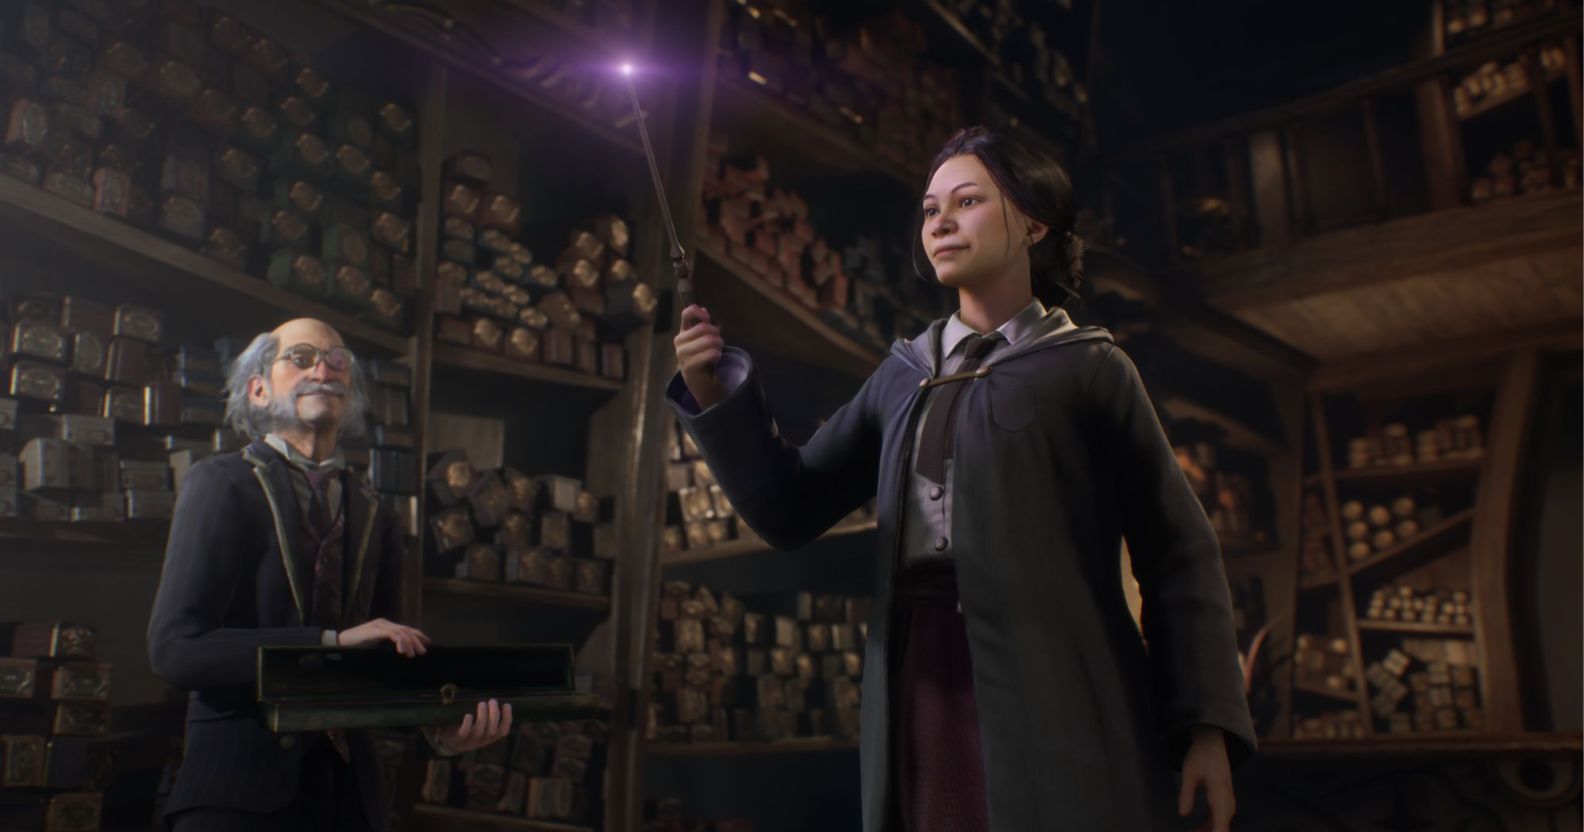 A student raises a wand in a Hogwarts wand shop.